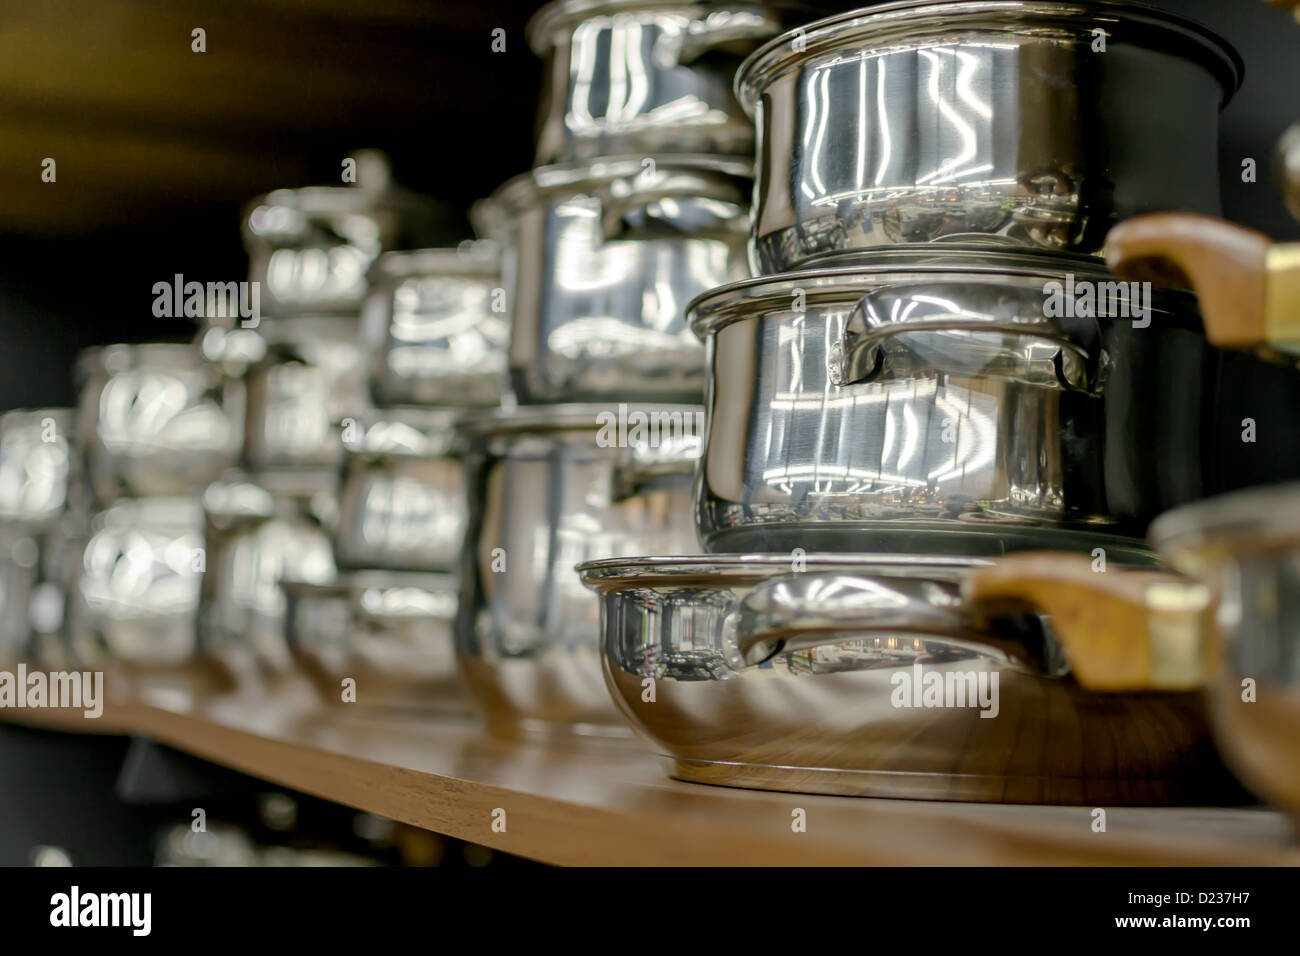 Stainless steel pots on wooden shelf Stock Photo